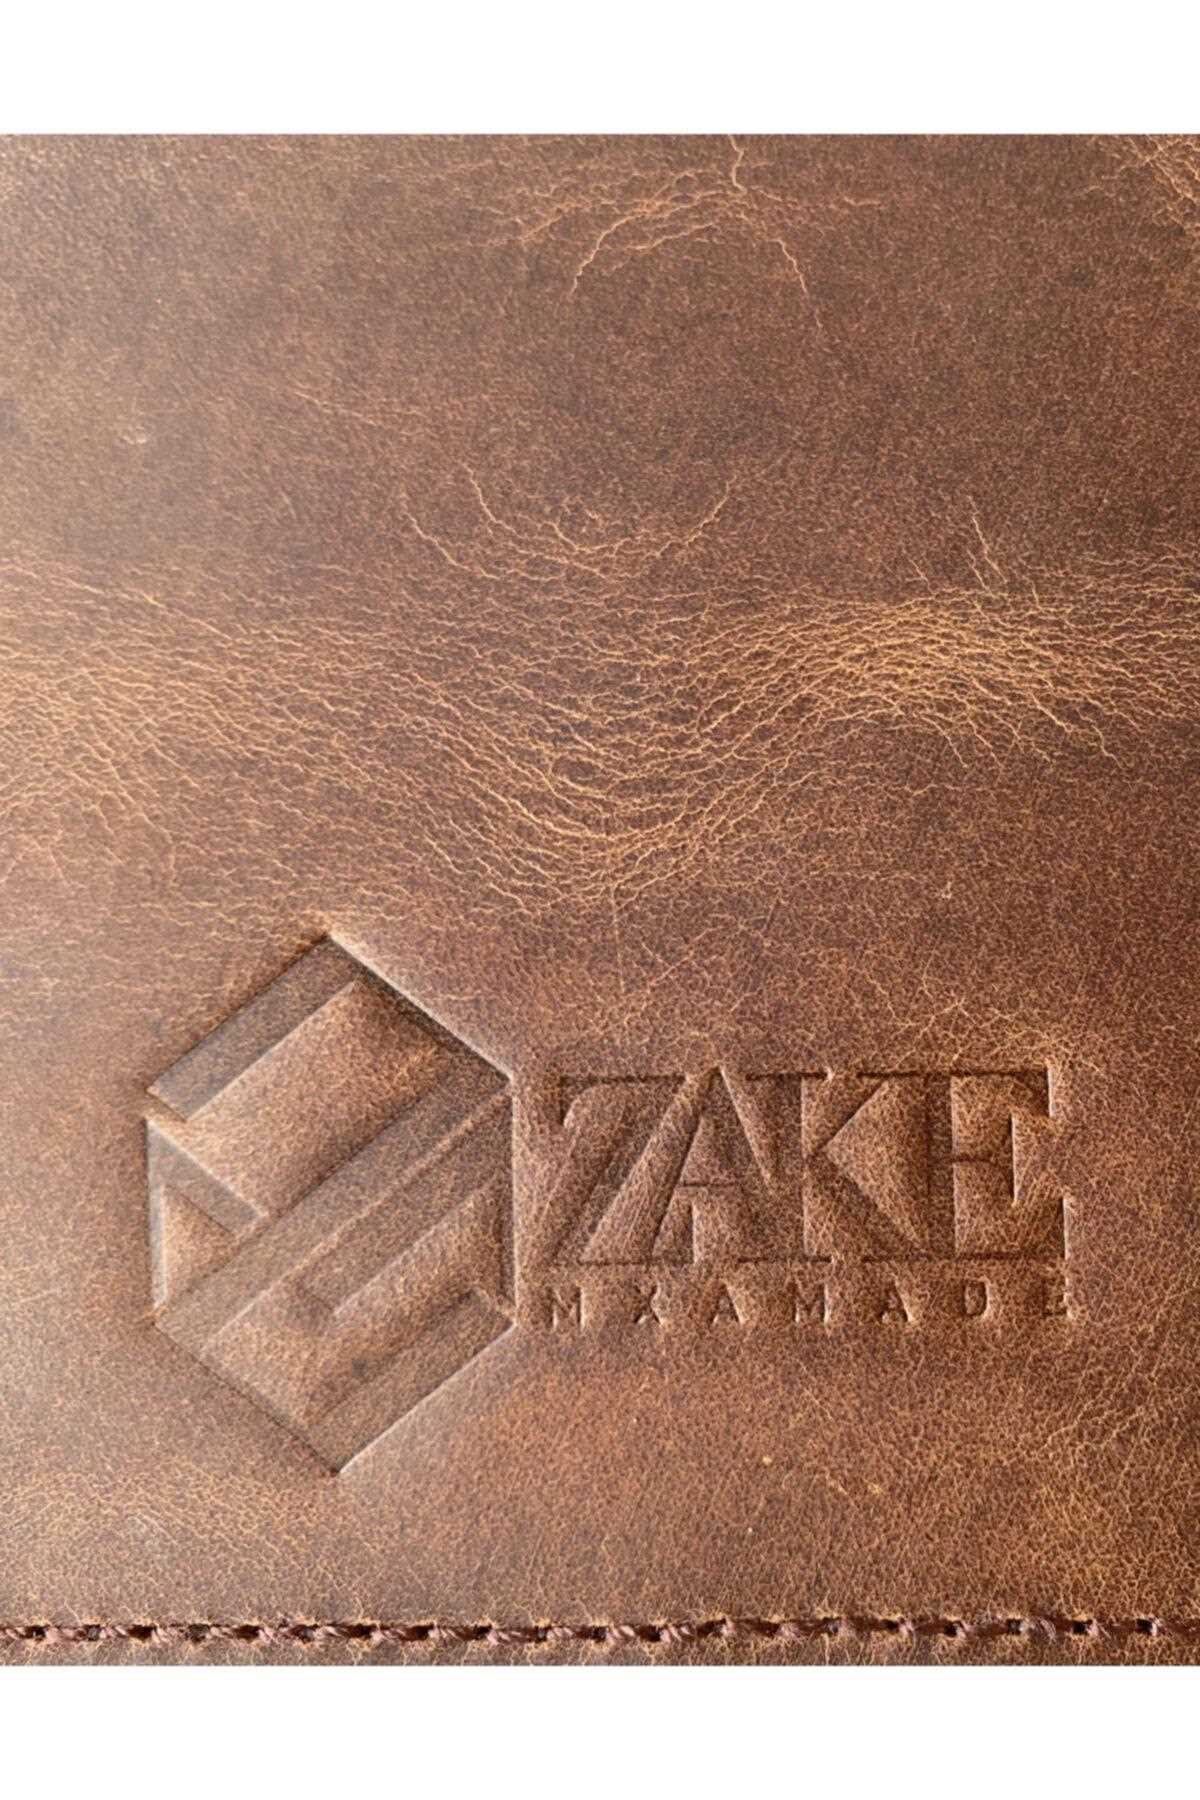 کیف لپ تاپ چرم طبیعی اصل برند Zake Mxamade رنگ قهوه ای کد ty96418089